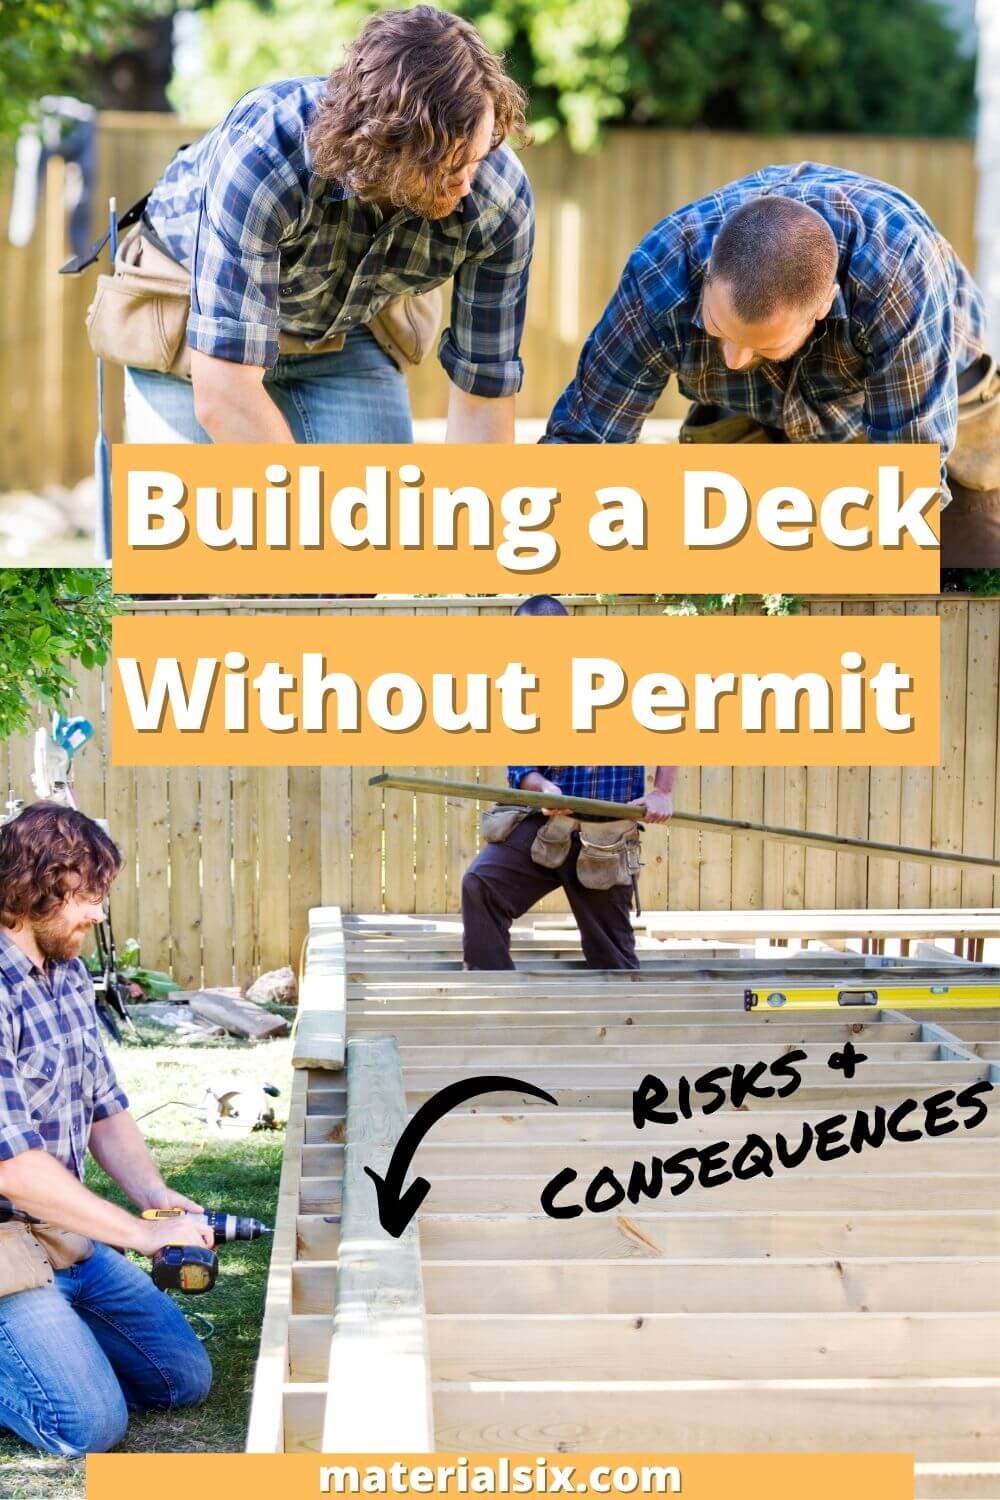 Building a Deck without Legal Permit (Risks & Consequences)